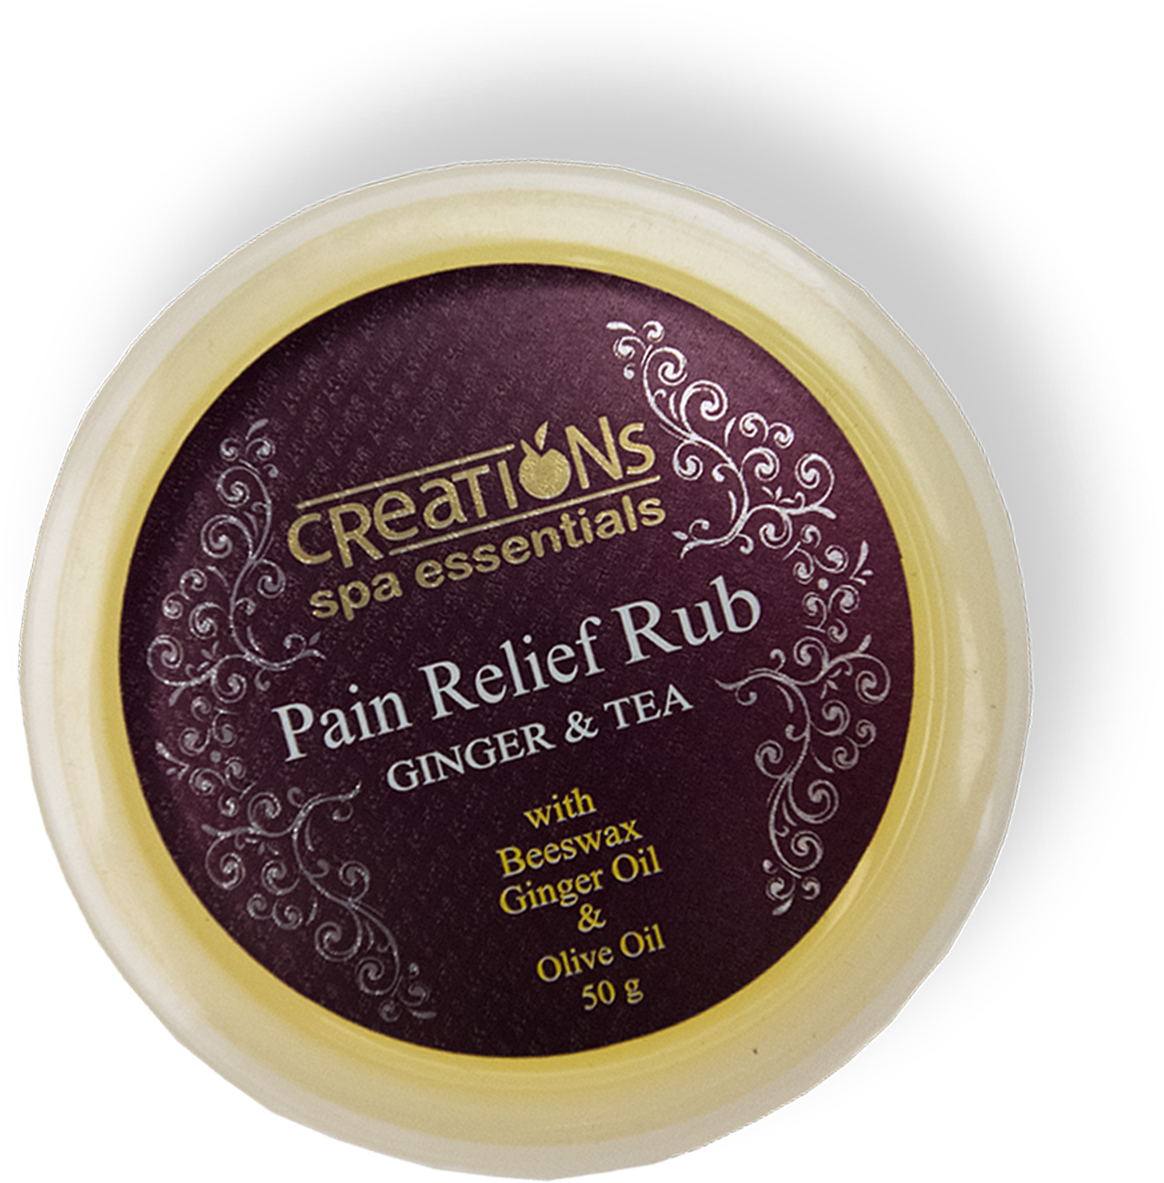 Fake vs Original Creation Spa Essentials Ginger. Pain Relief Rub